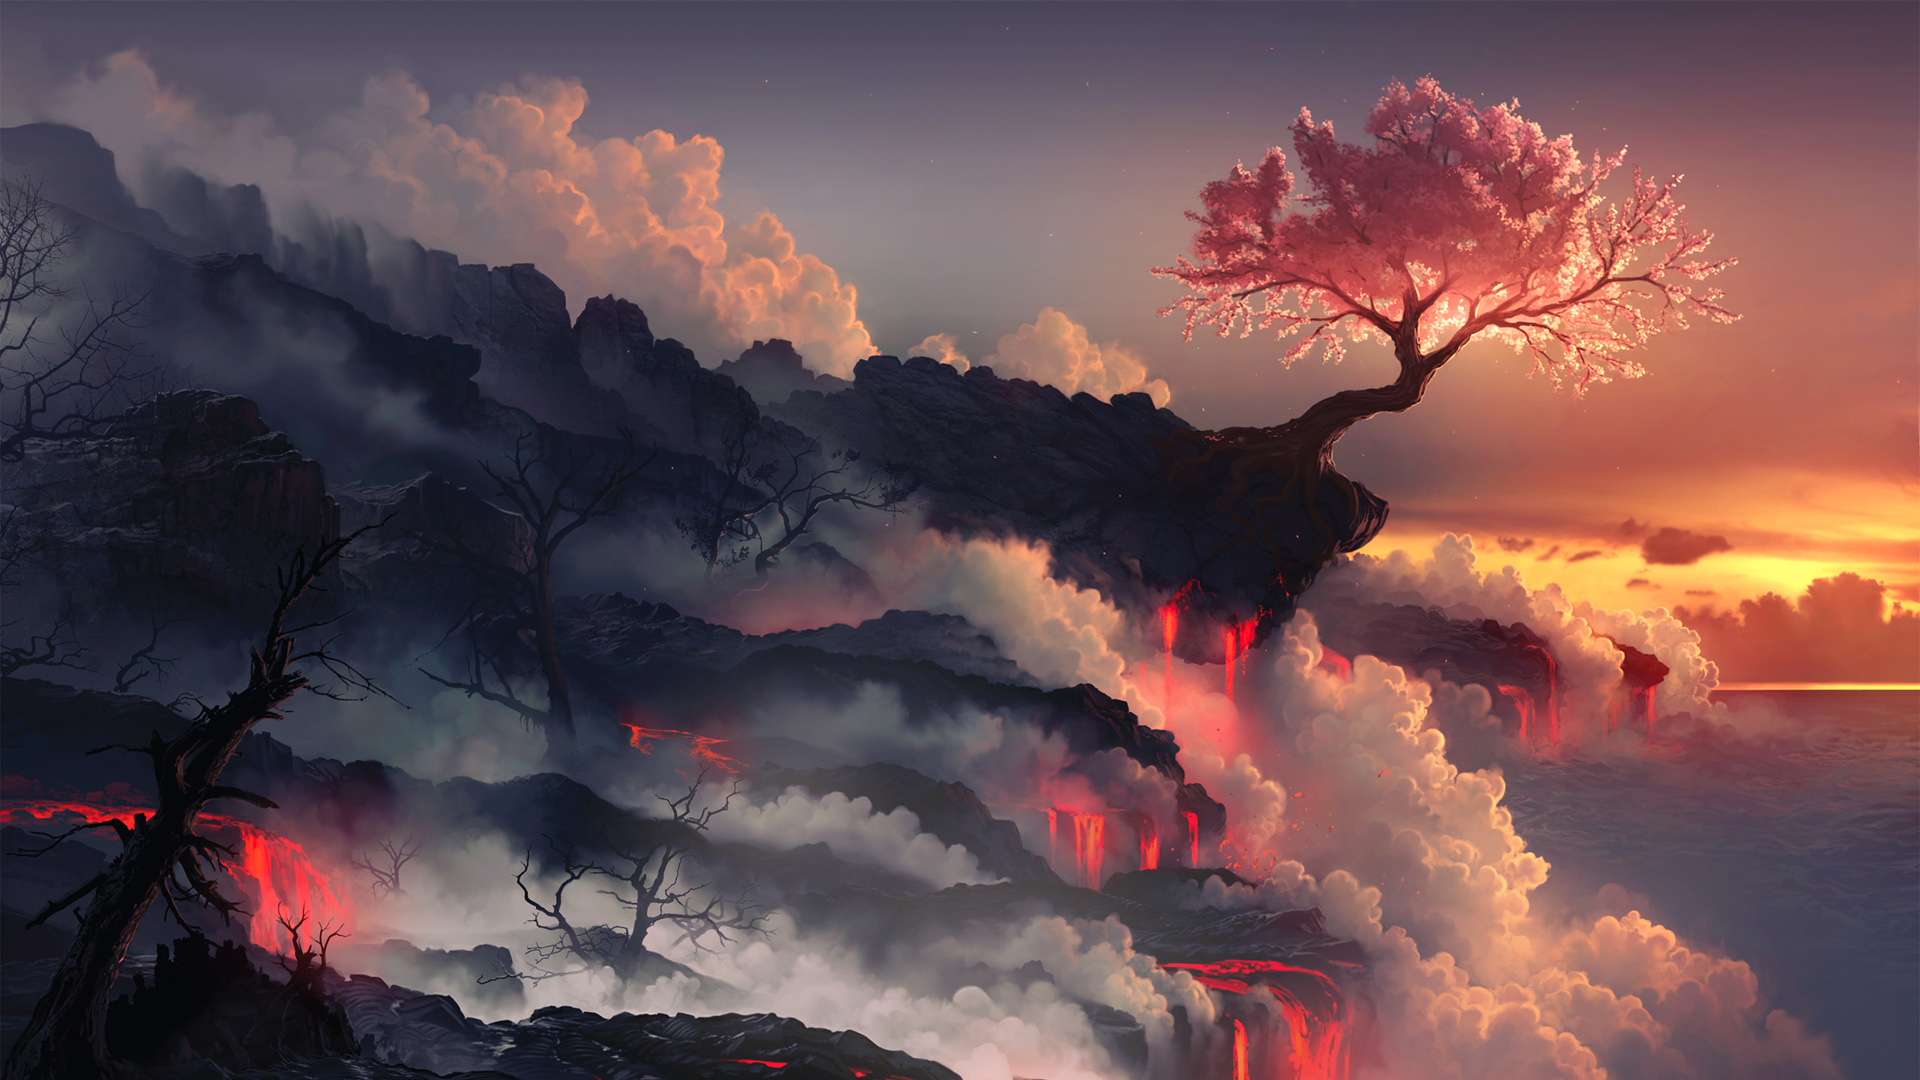 火山岩浆悬崖边上顽强生存的树和枯树唯美<span style='color:red;'>插画壁纸</span>图片